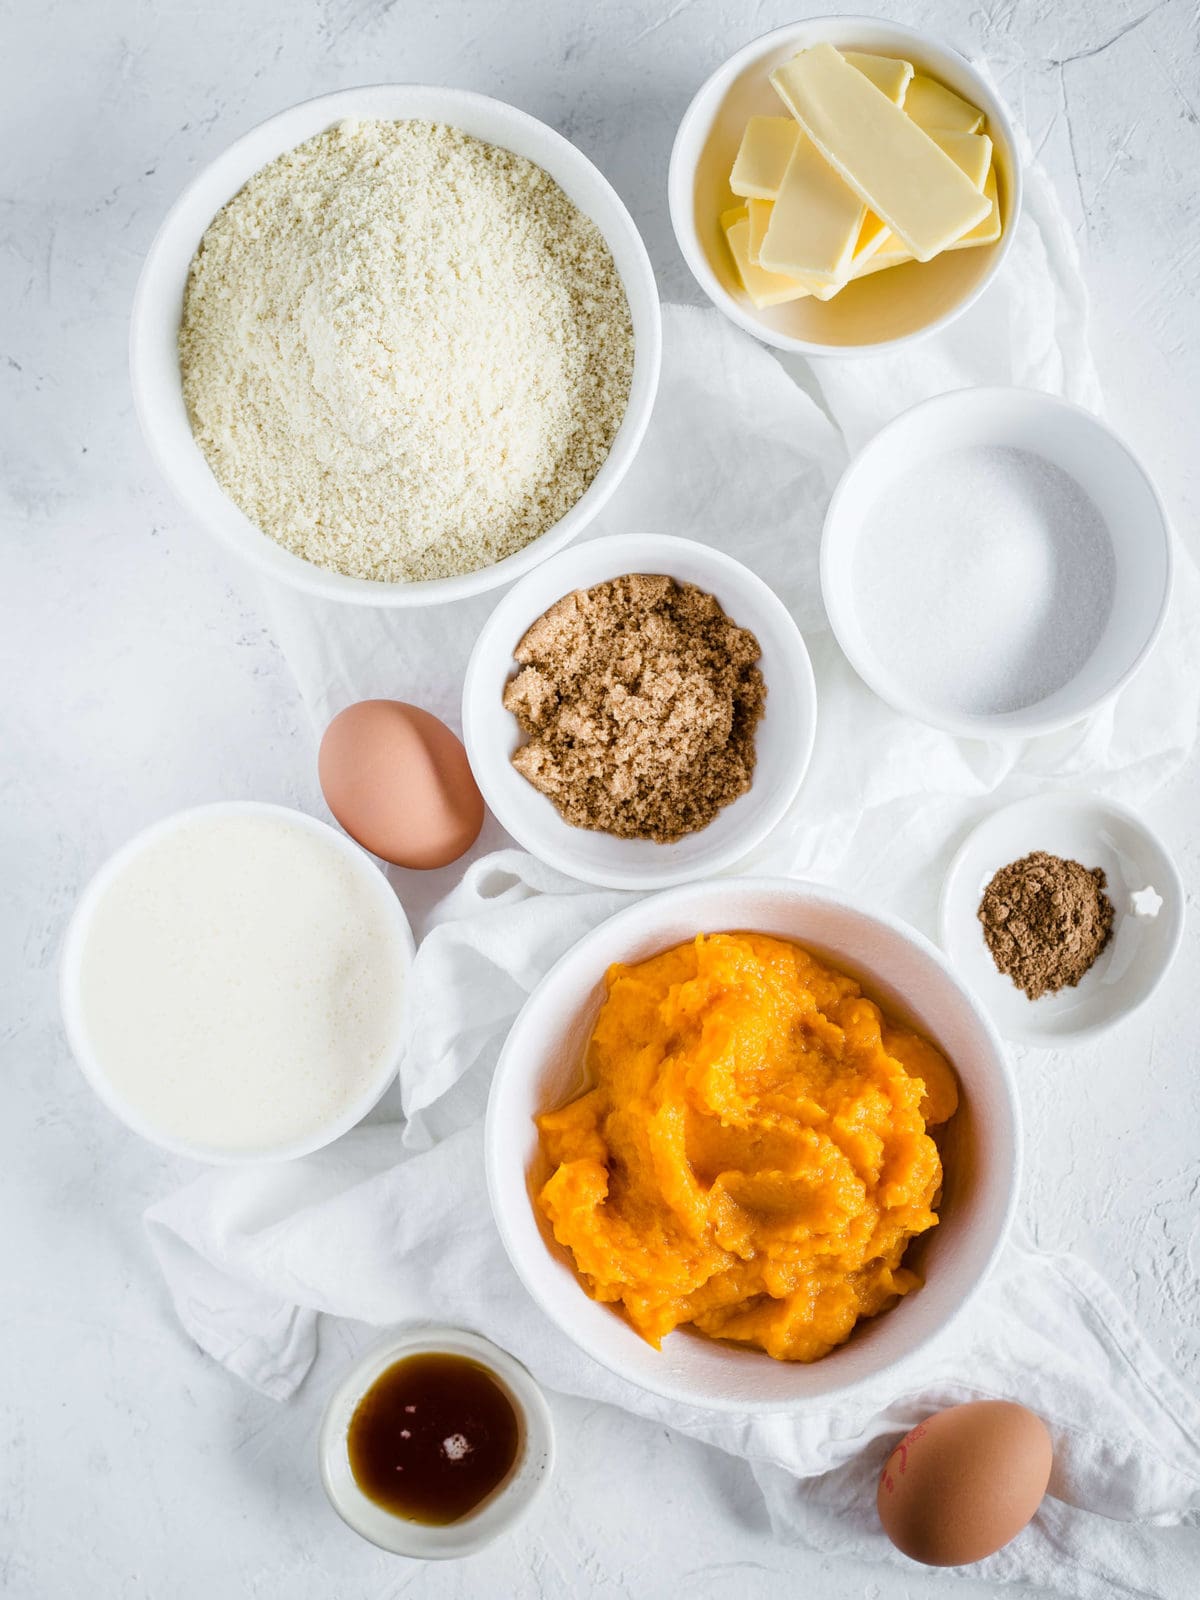 Ingredients for keto pumpkin pie arranged and shot overhead